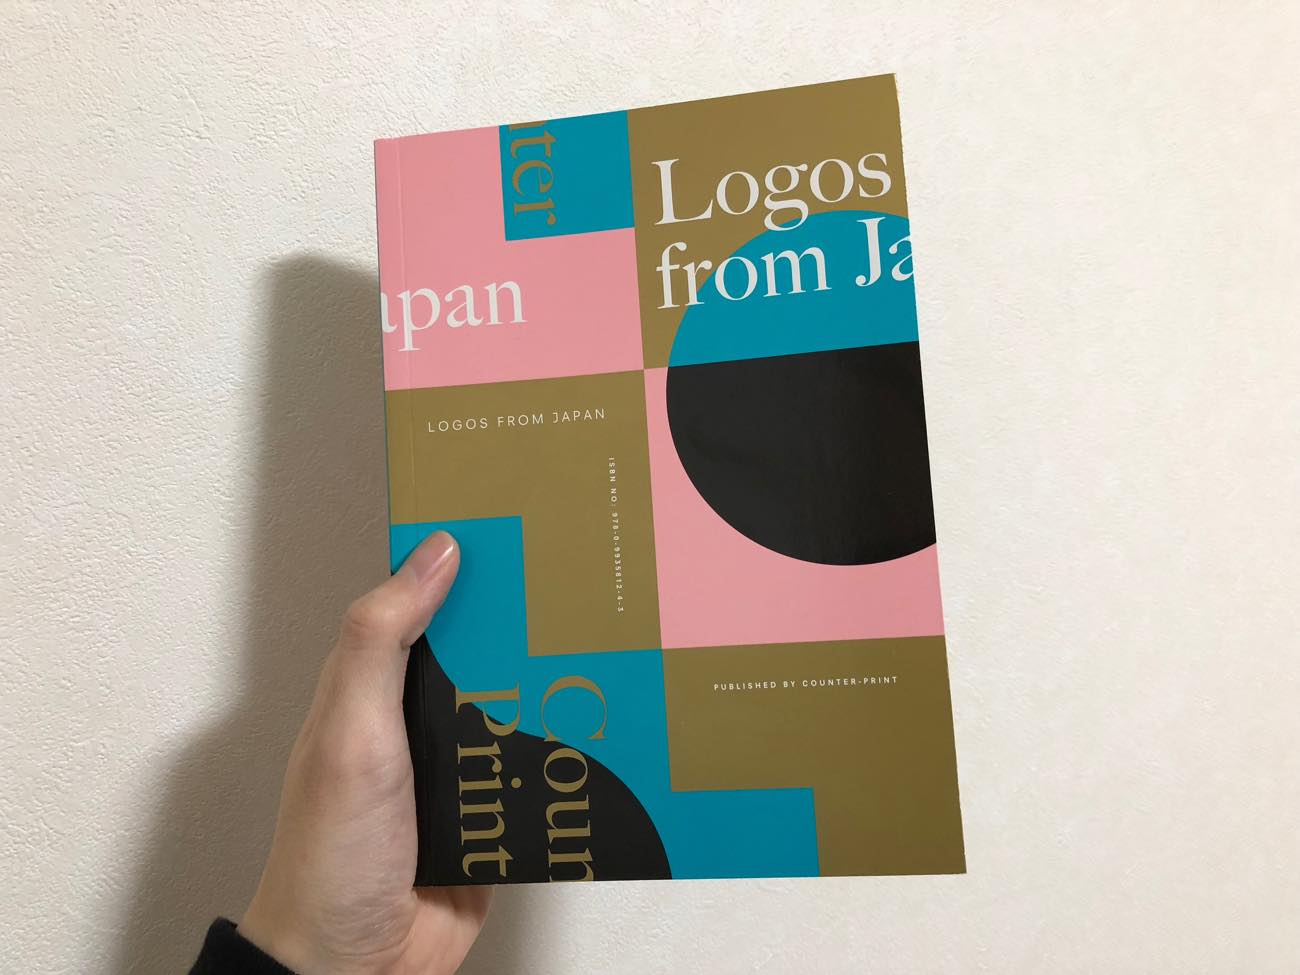 Counter-Print 'Logos from Japan'